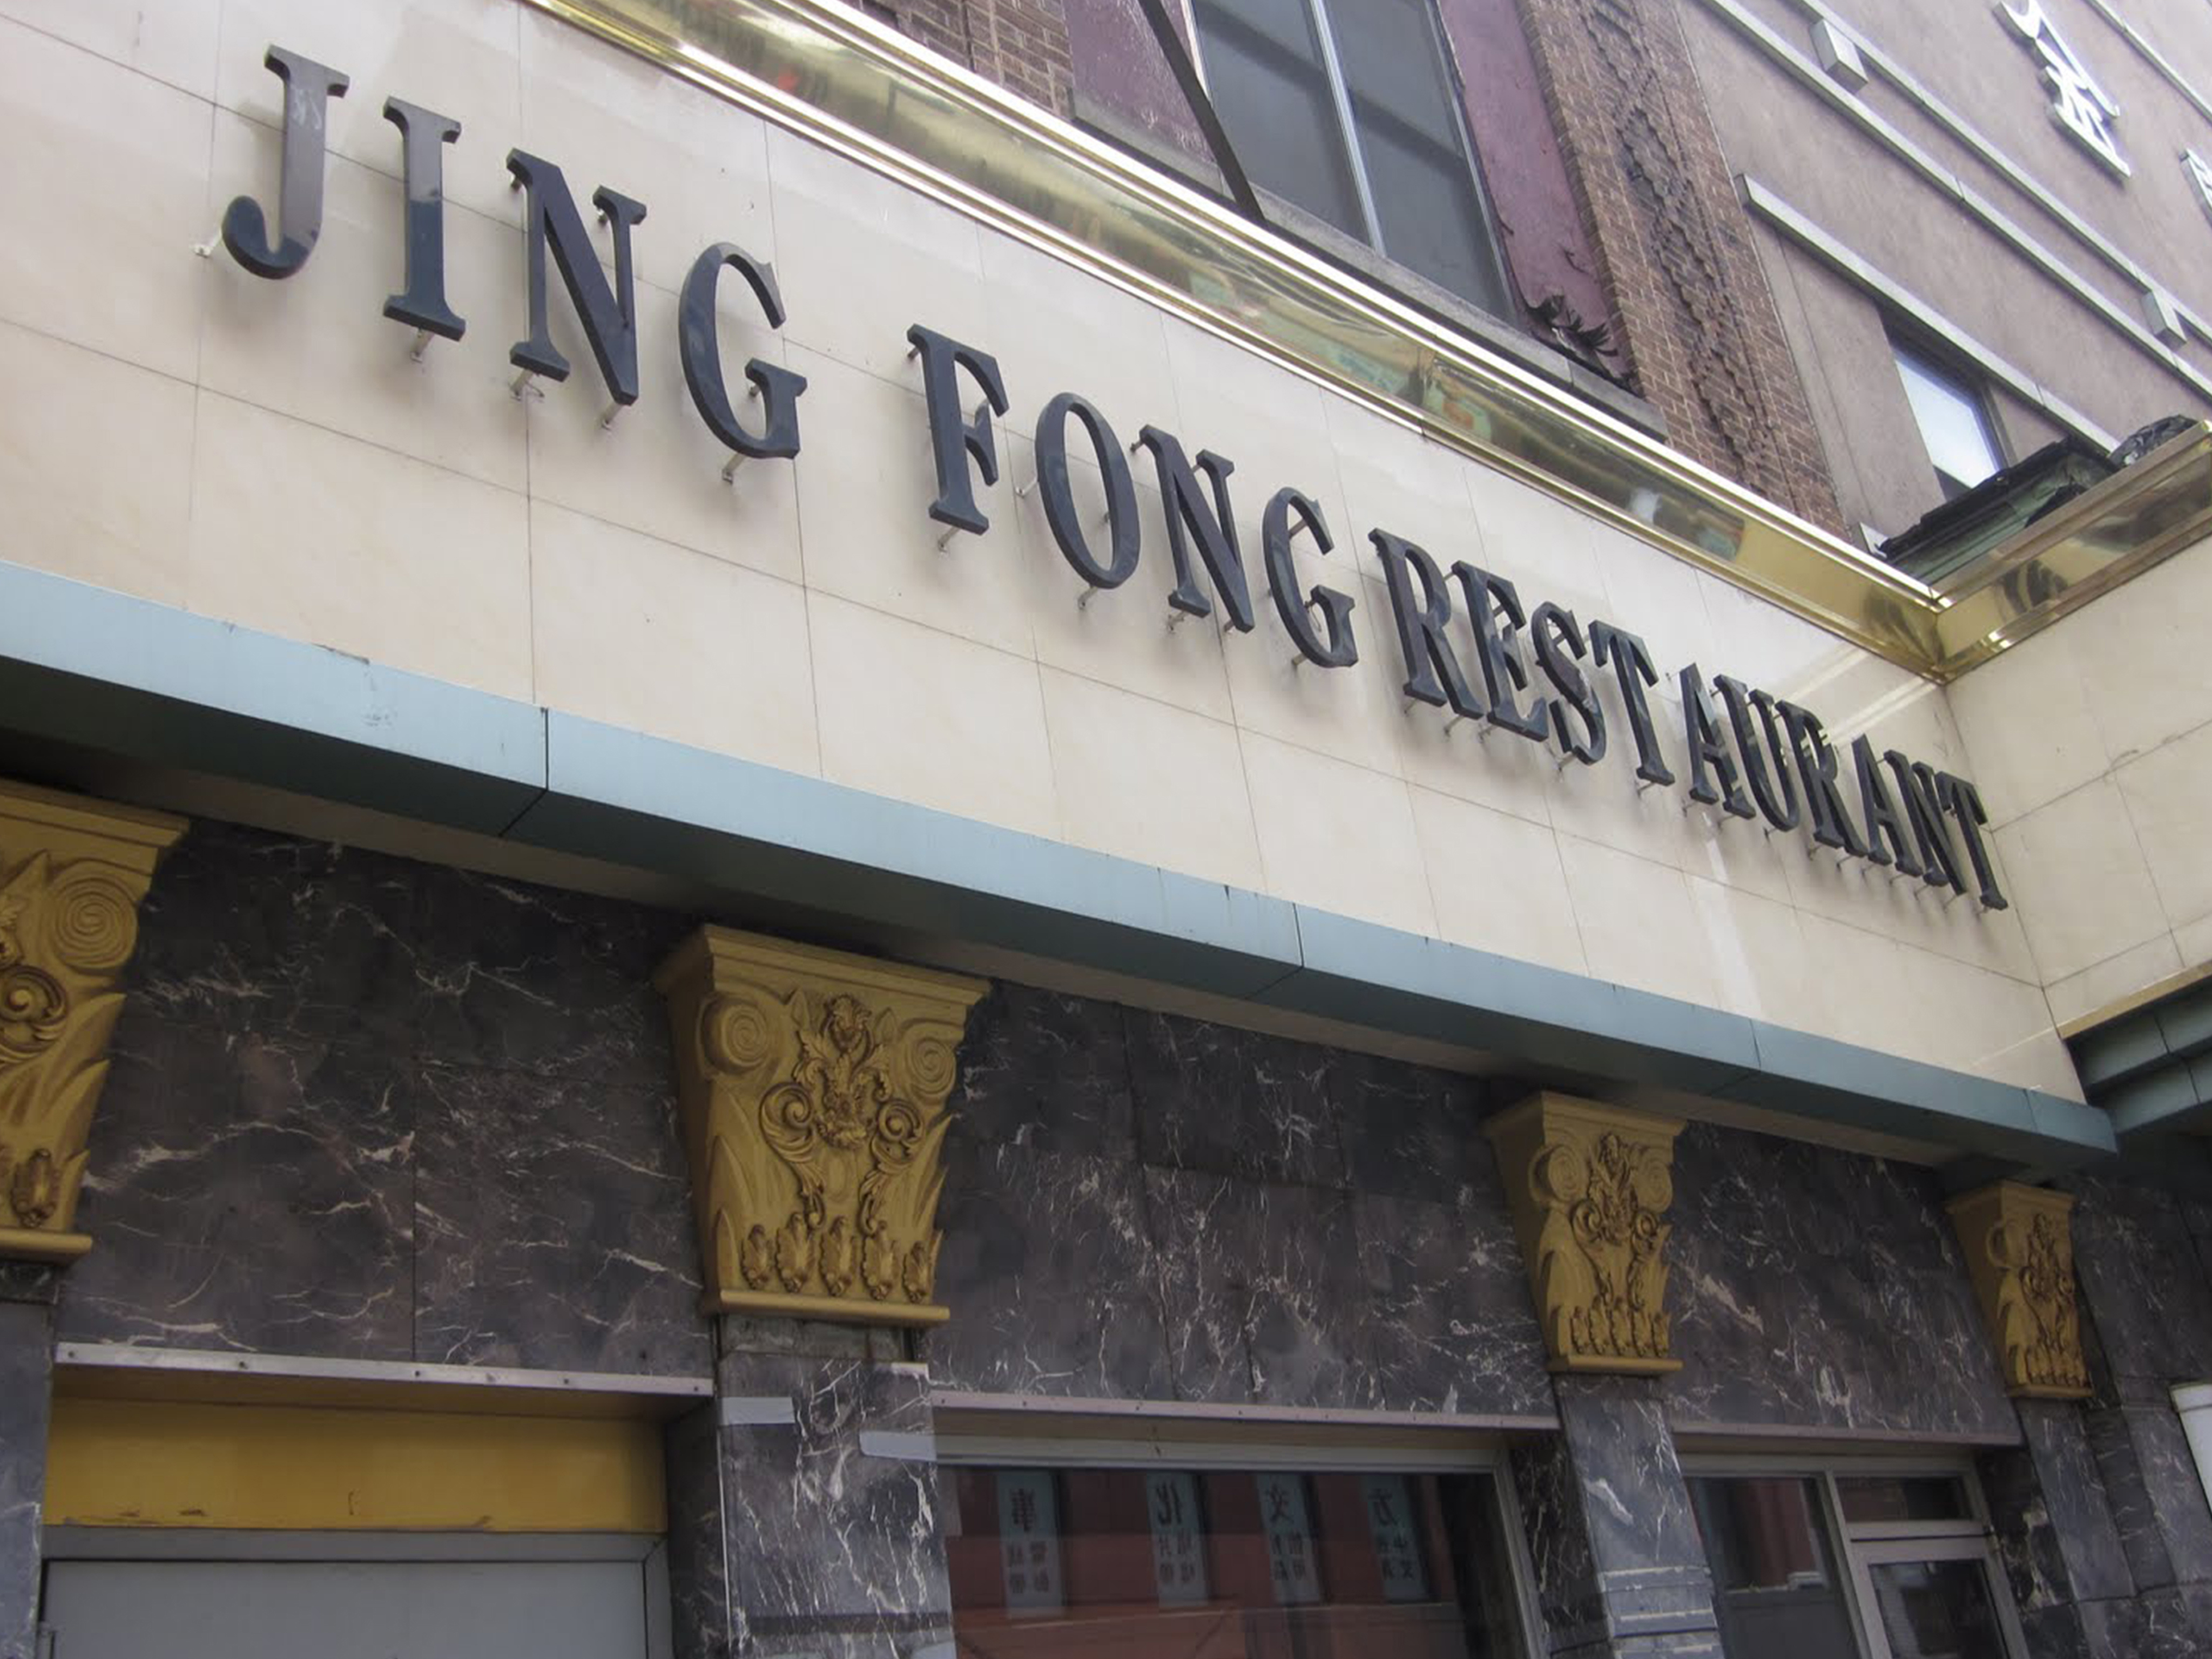 jing fong restaurant new york city